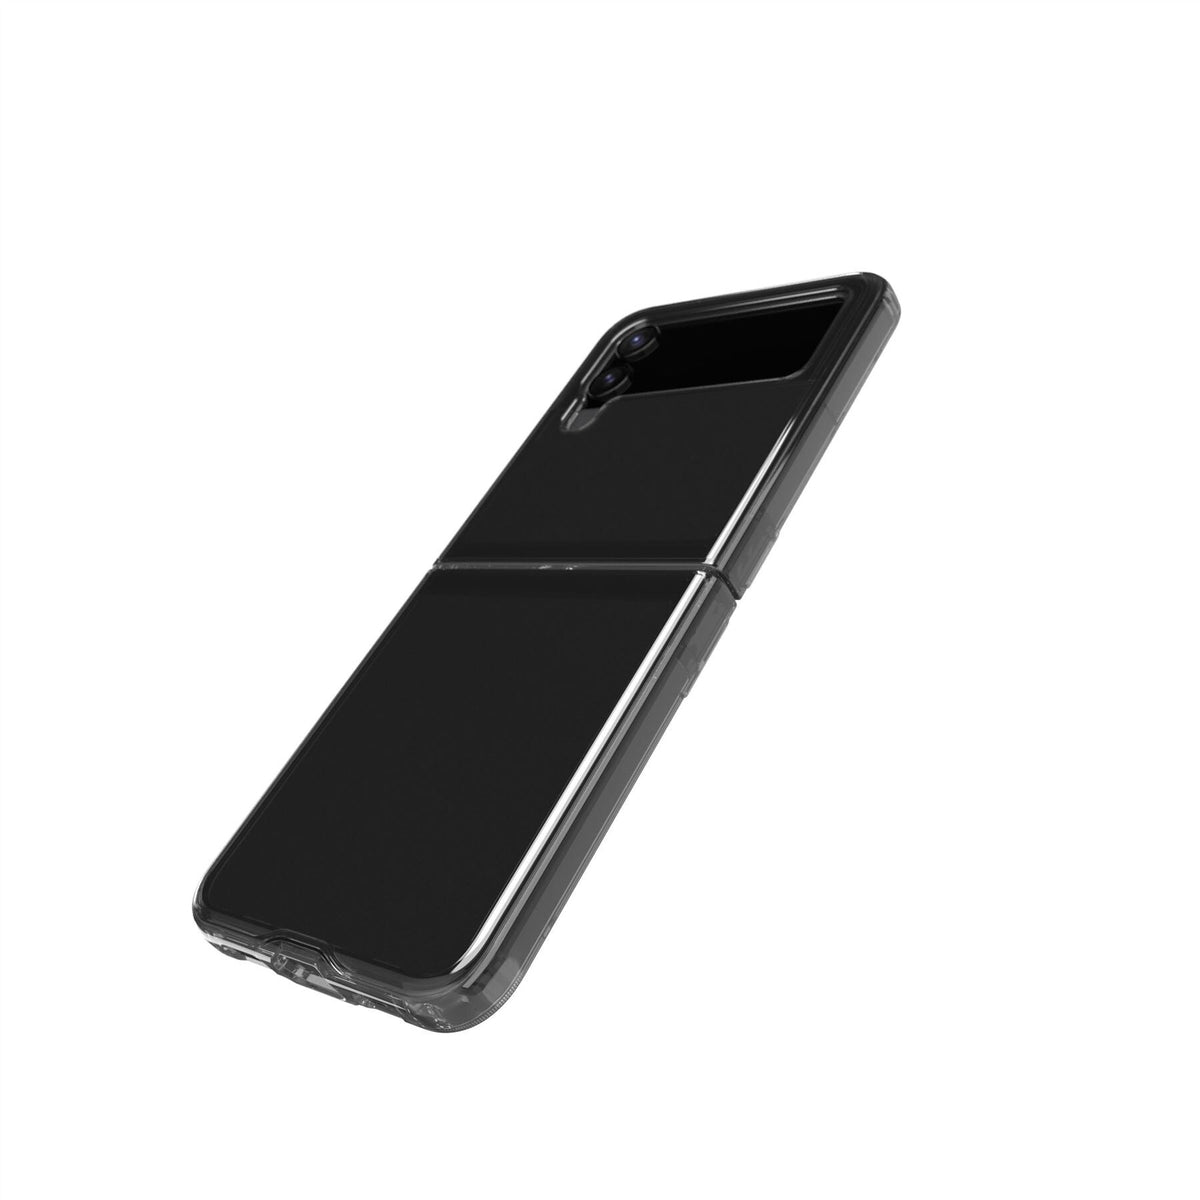 Tech21 T21-9556 mobile phone case for Galaxy Z Flip4 in Grey